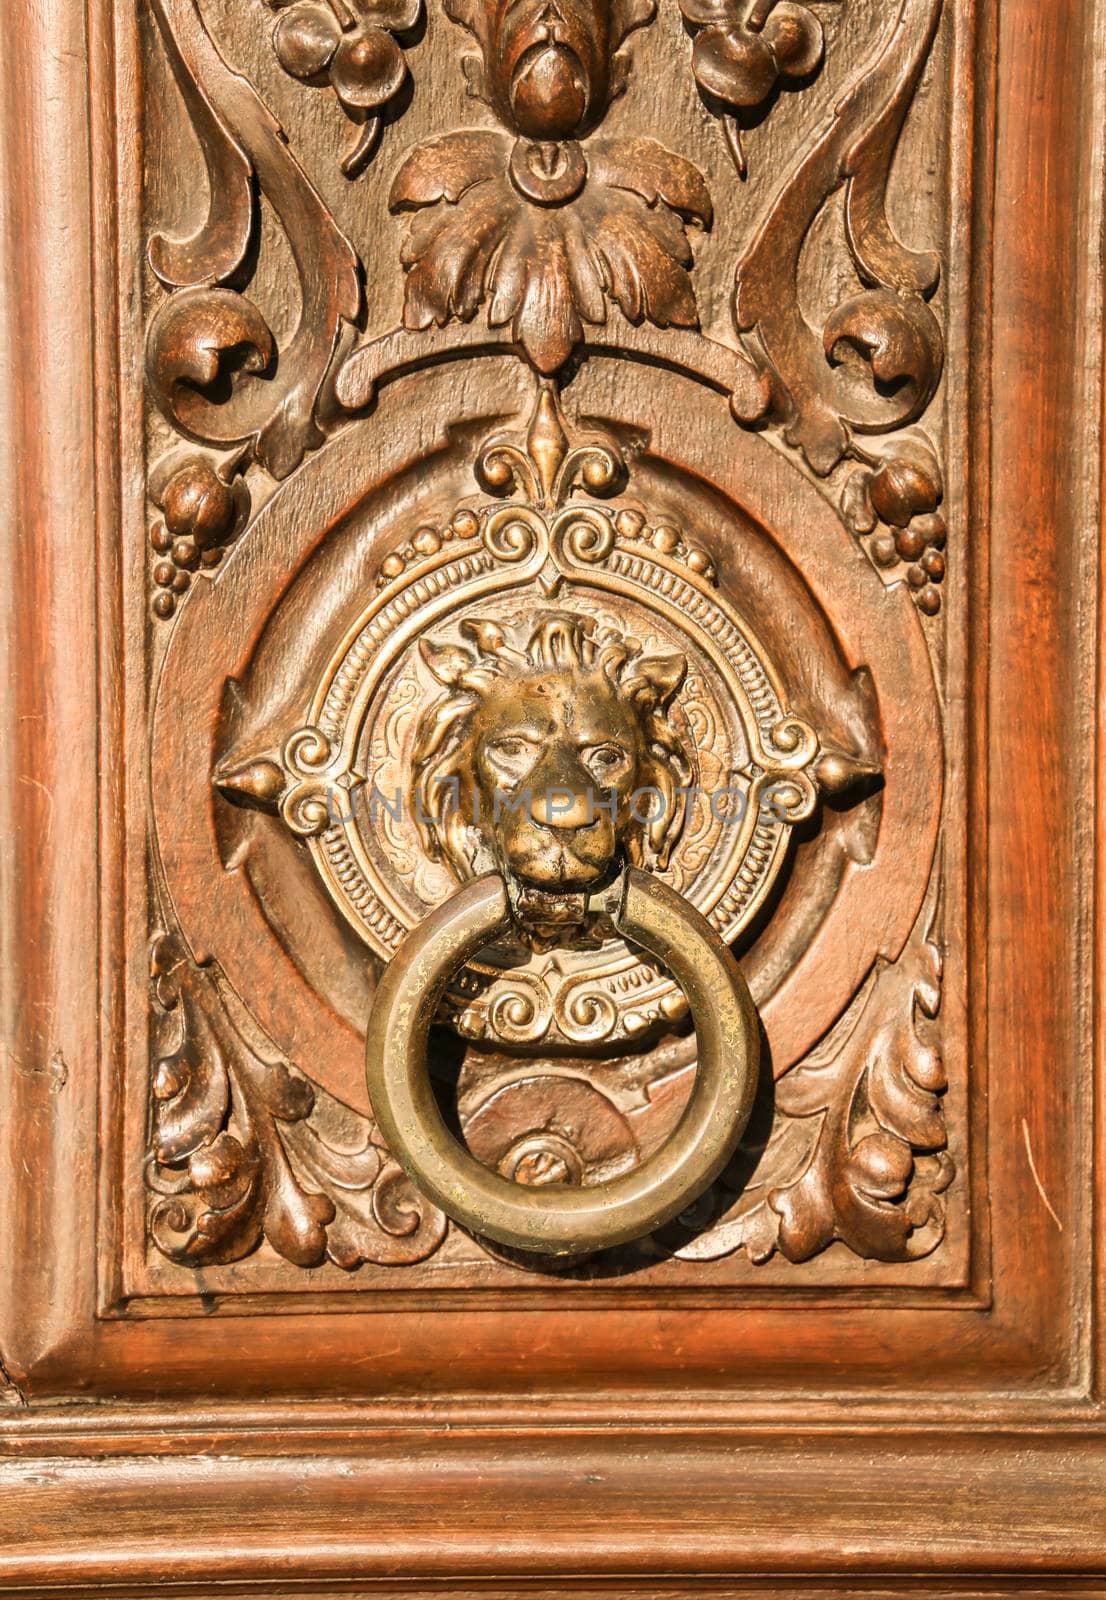 Carved wooden door and vintage golden knocker by soniabonet